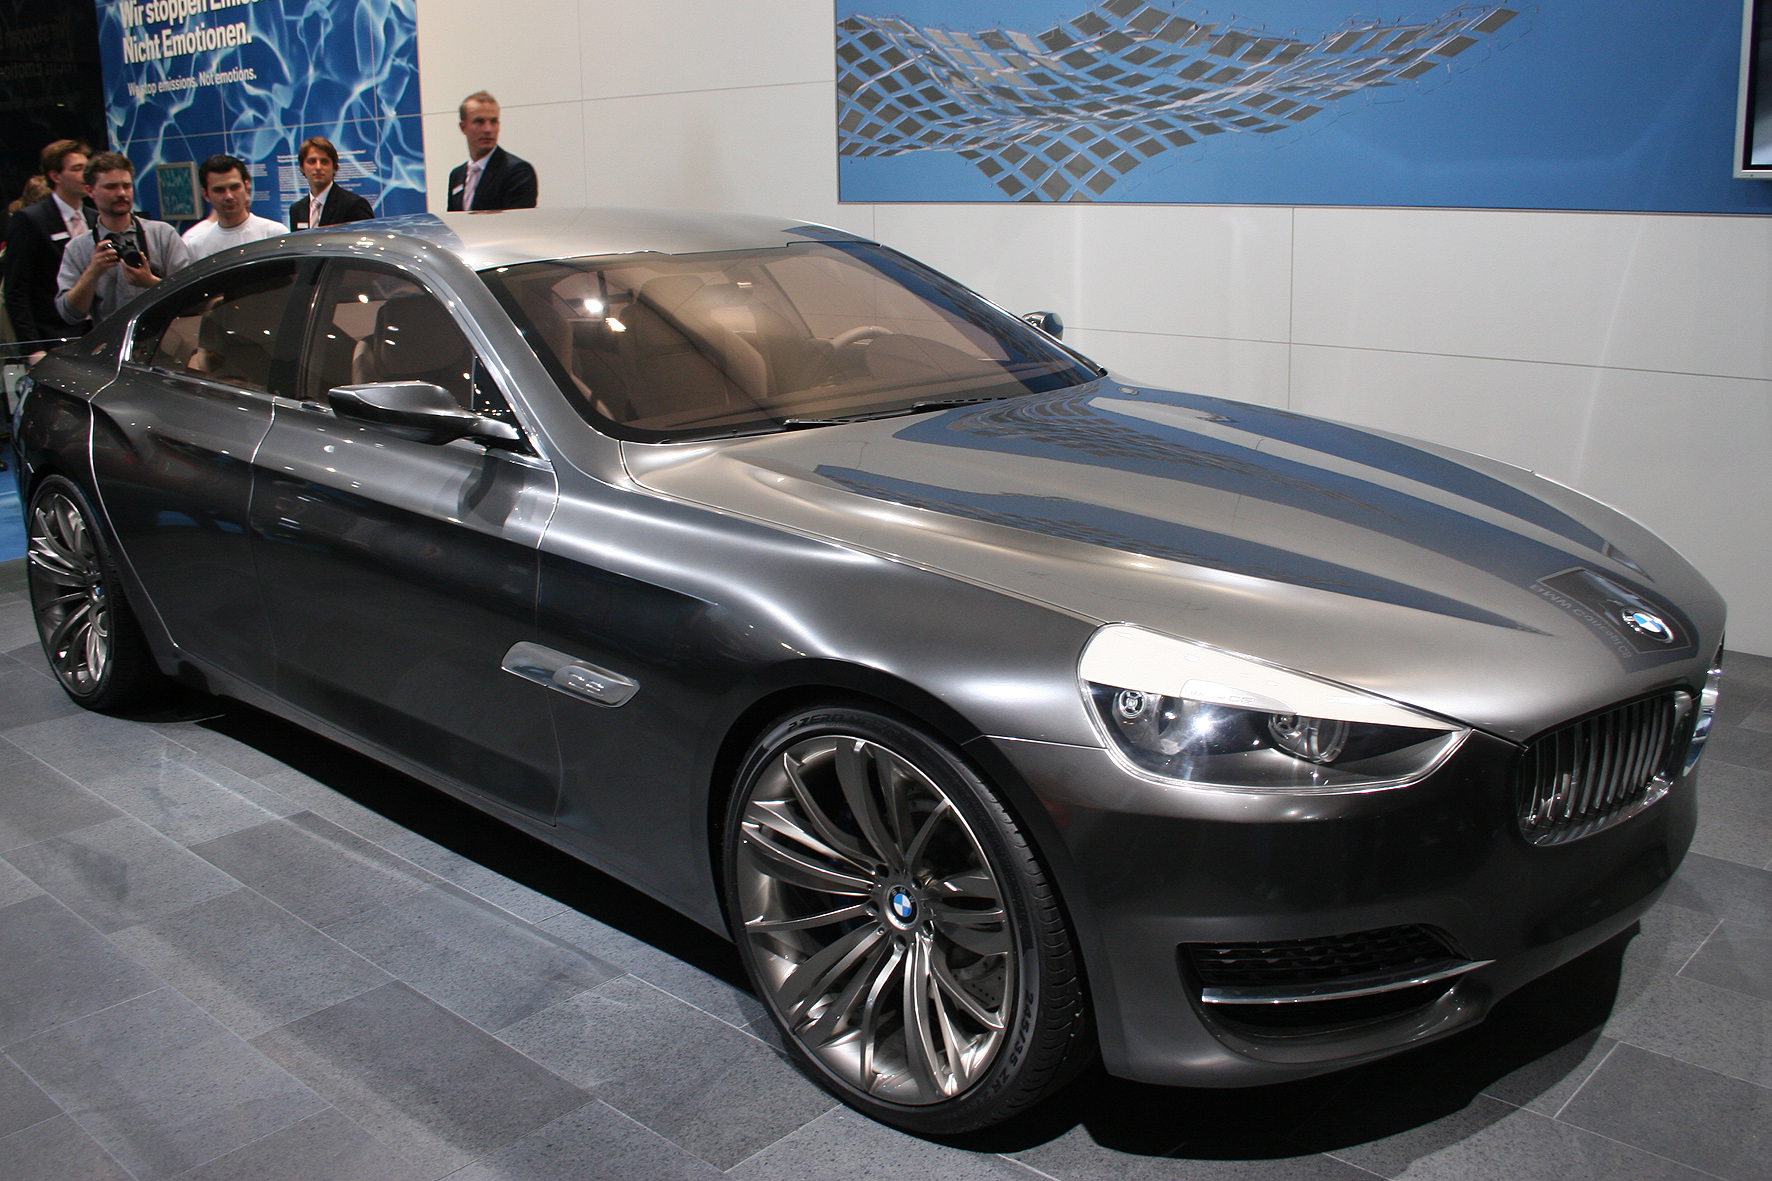 BMW Concept CS | Flickr - Photo Sharing!